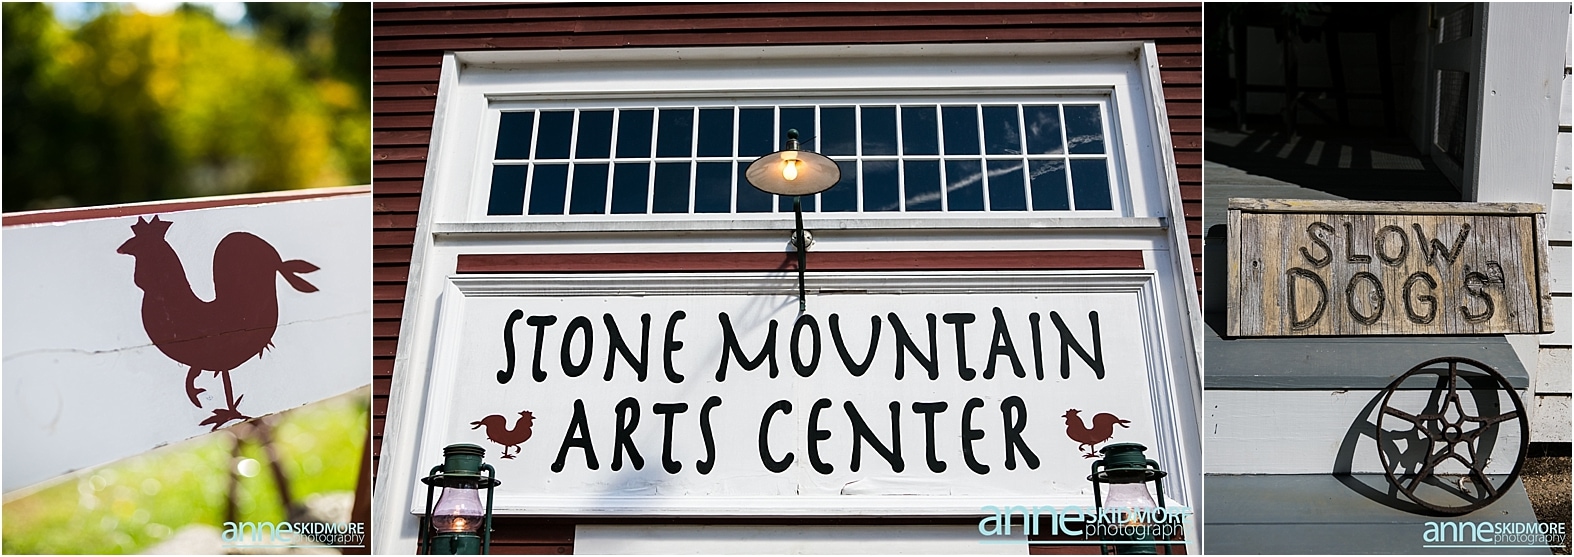 Stone_Mountain_Arts_Center_002